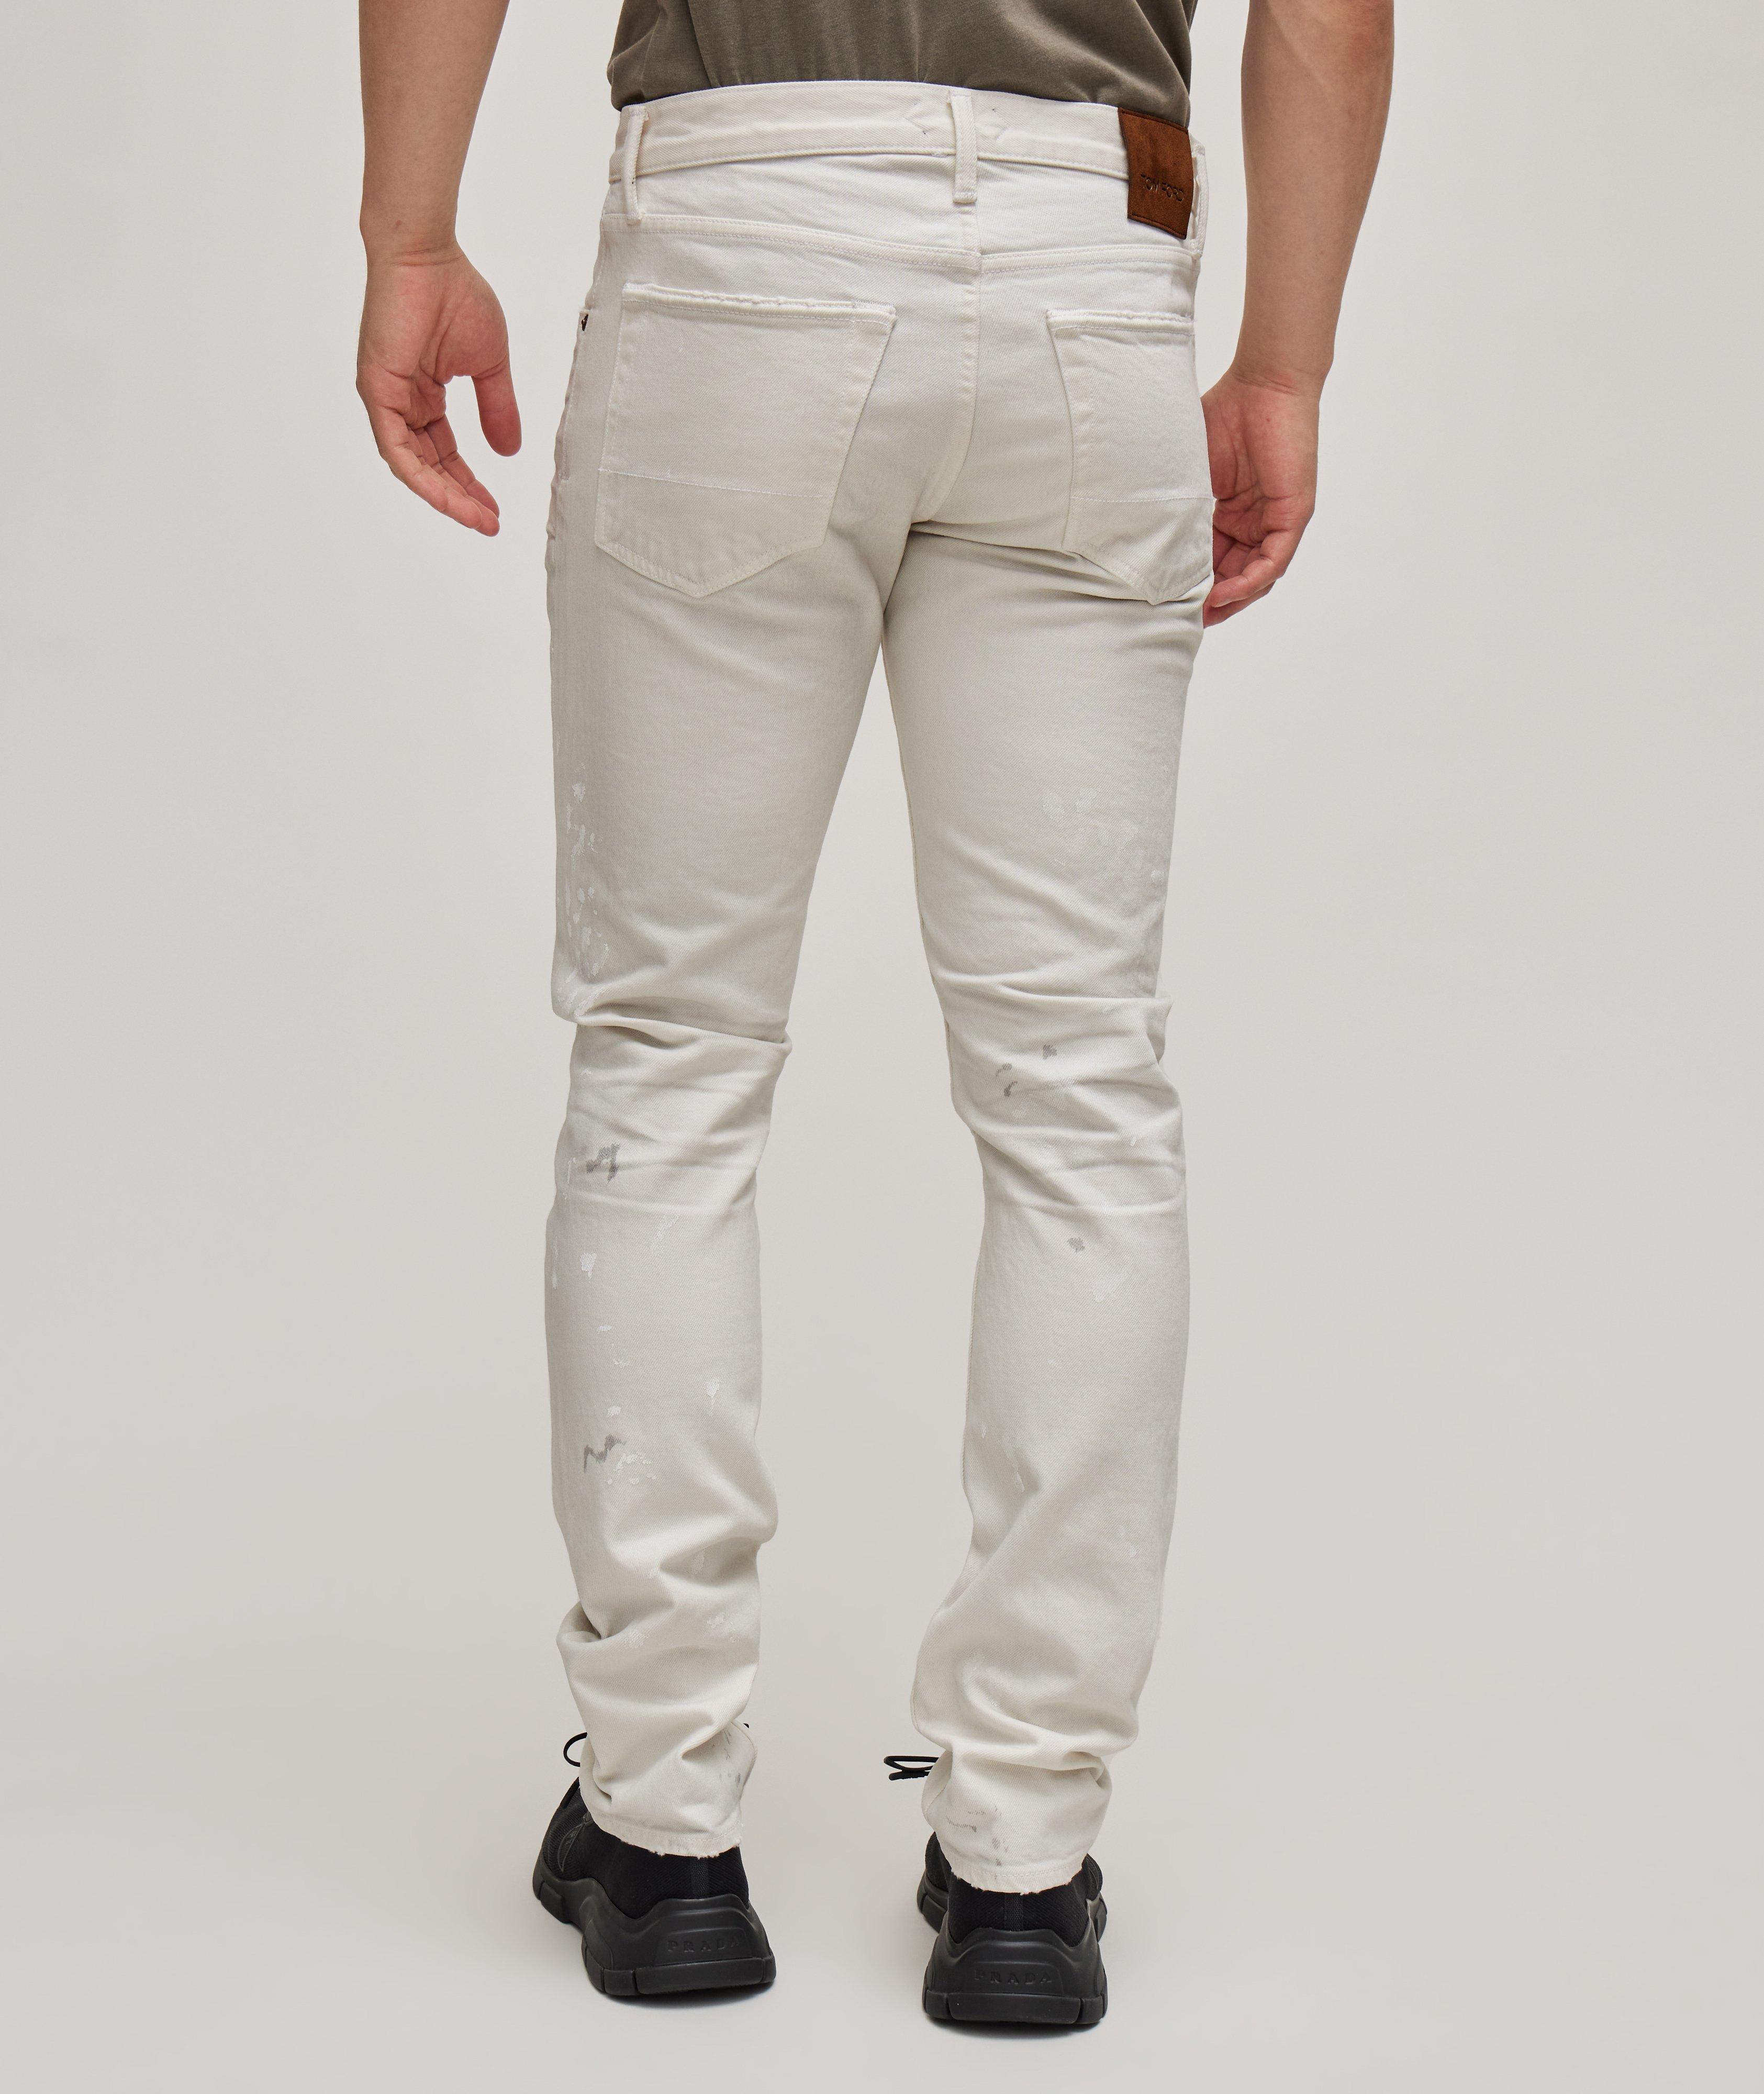 Slim-Fit Japanese Selvedge Cotton Blend Jeans image 2